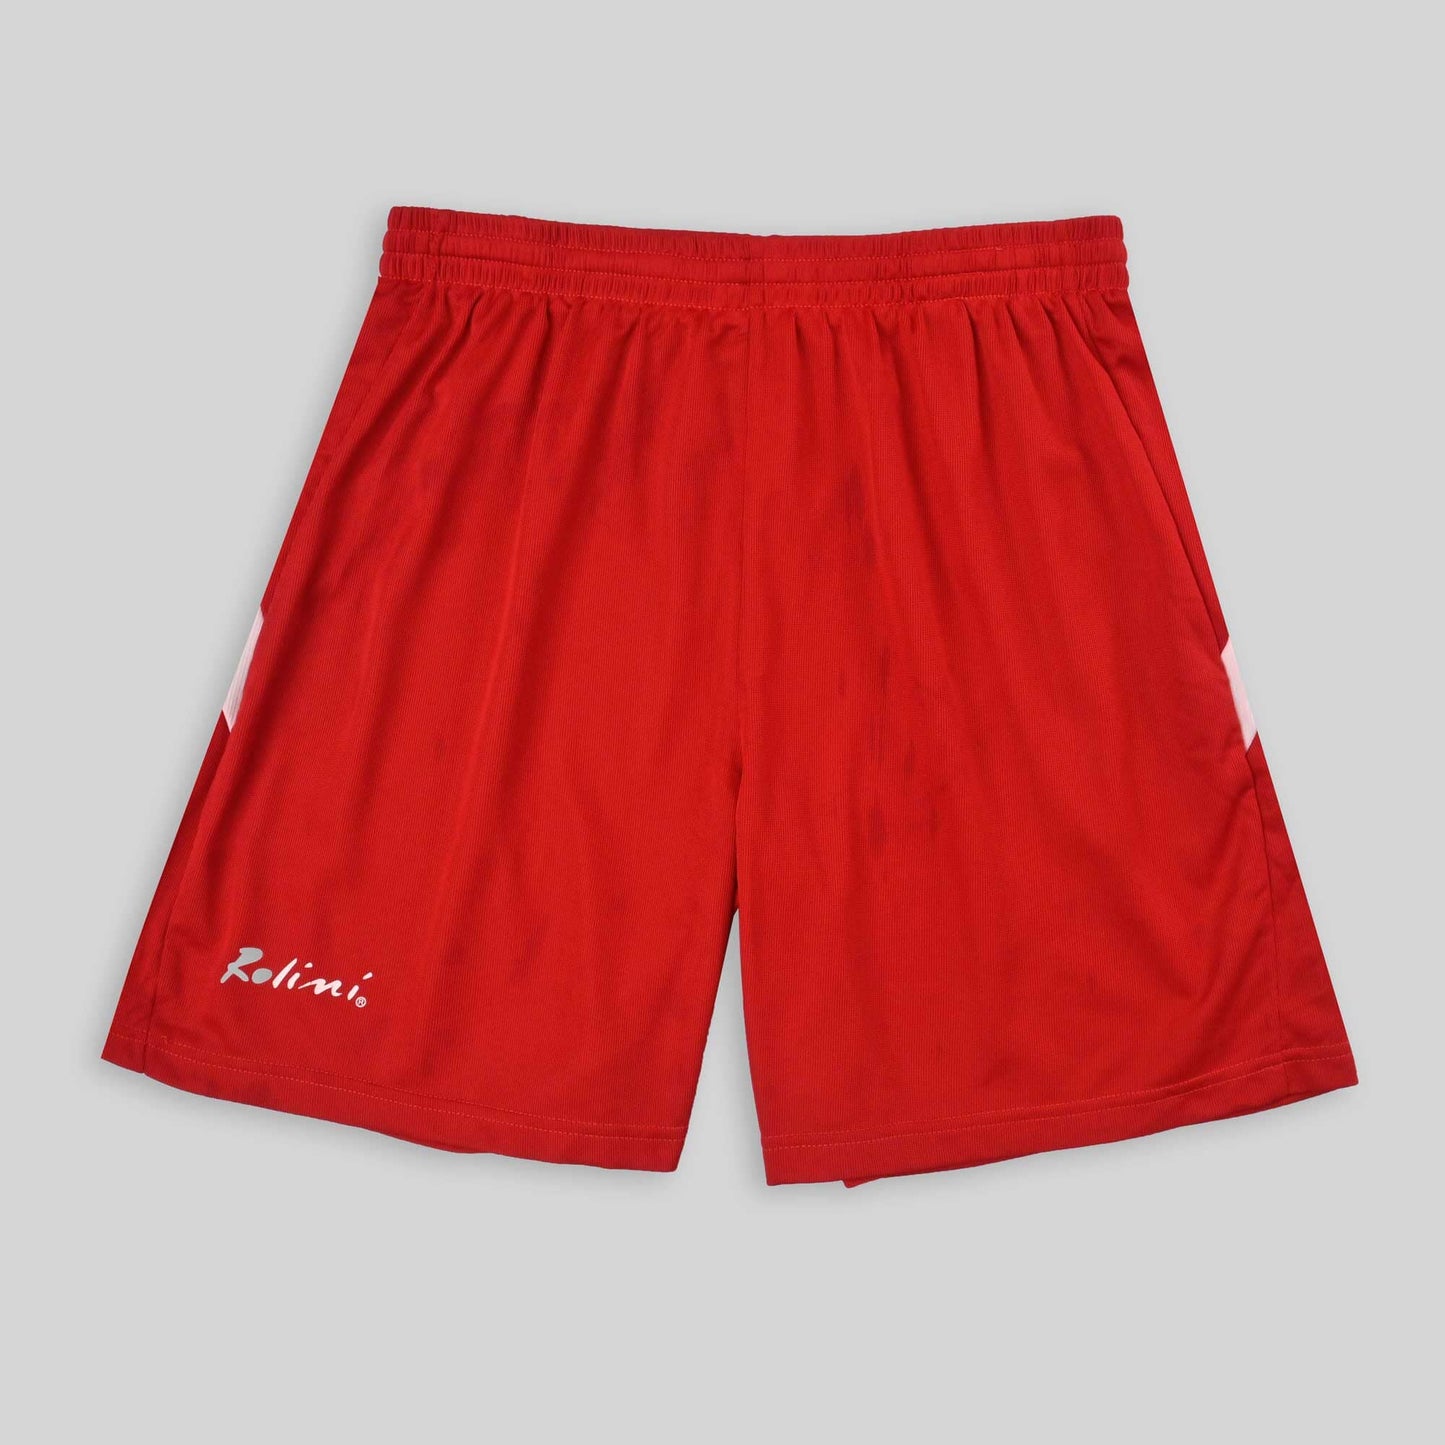 Rolini Men's Logo Printed Activewear Shorts Men's Shorts HAS Apparel 